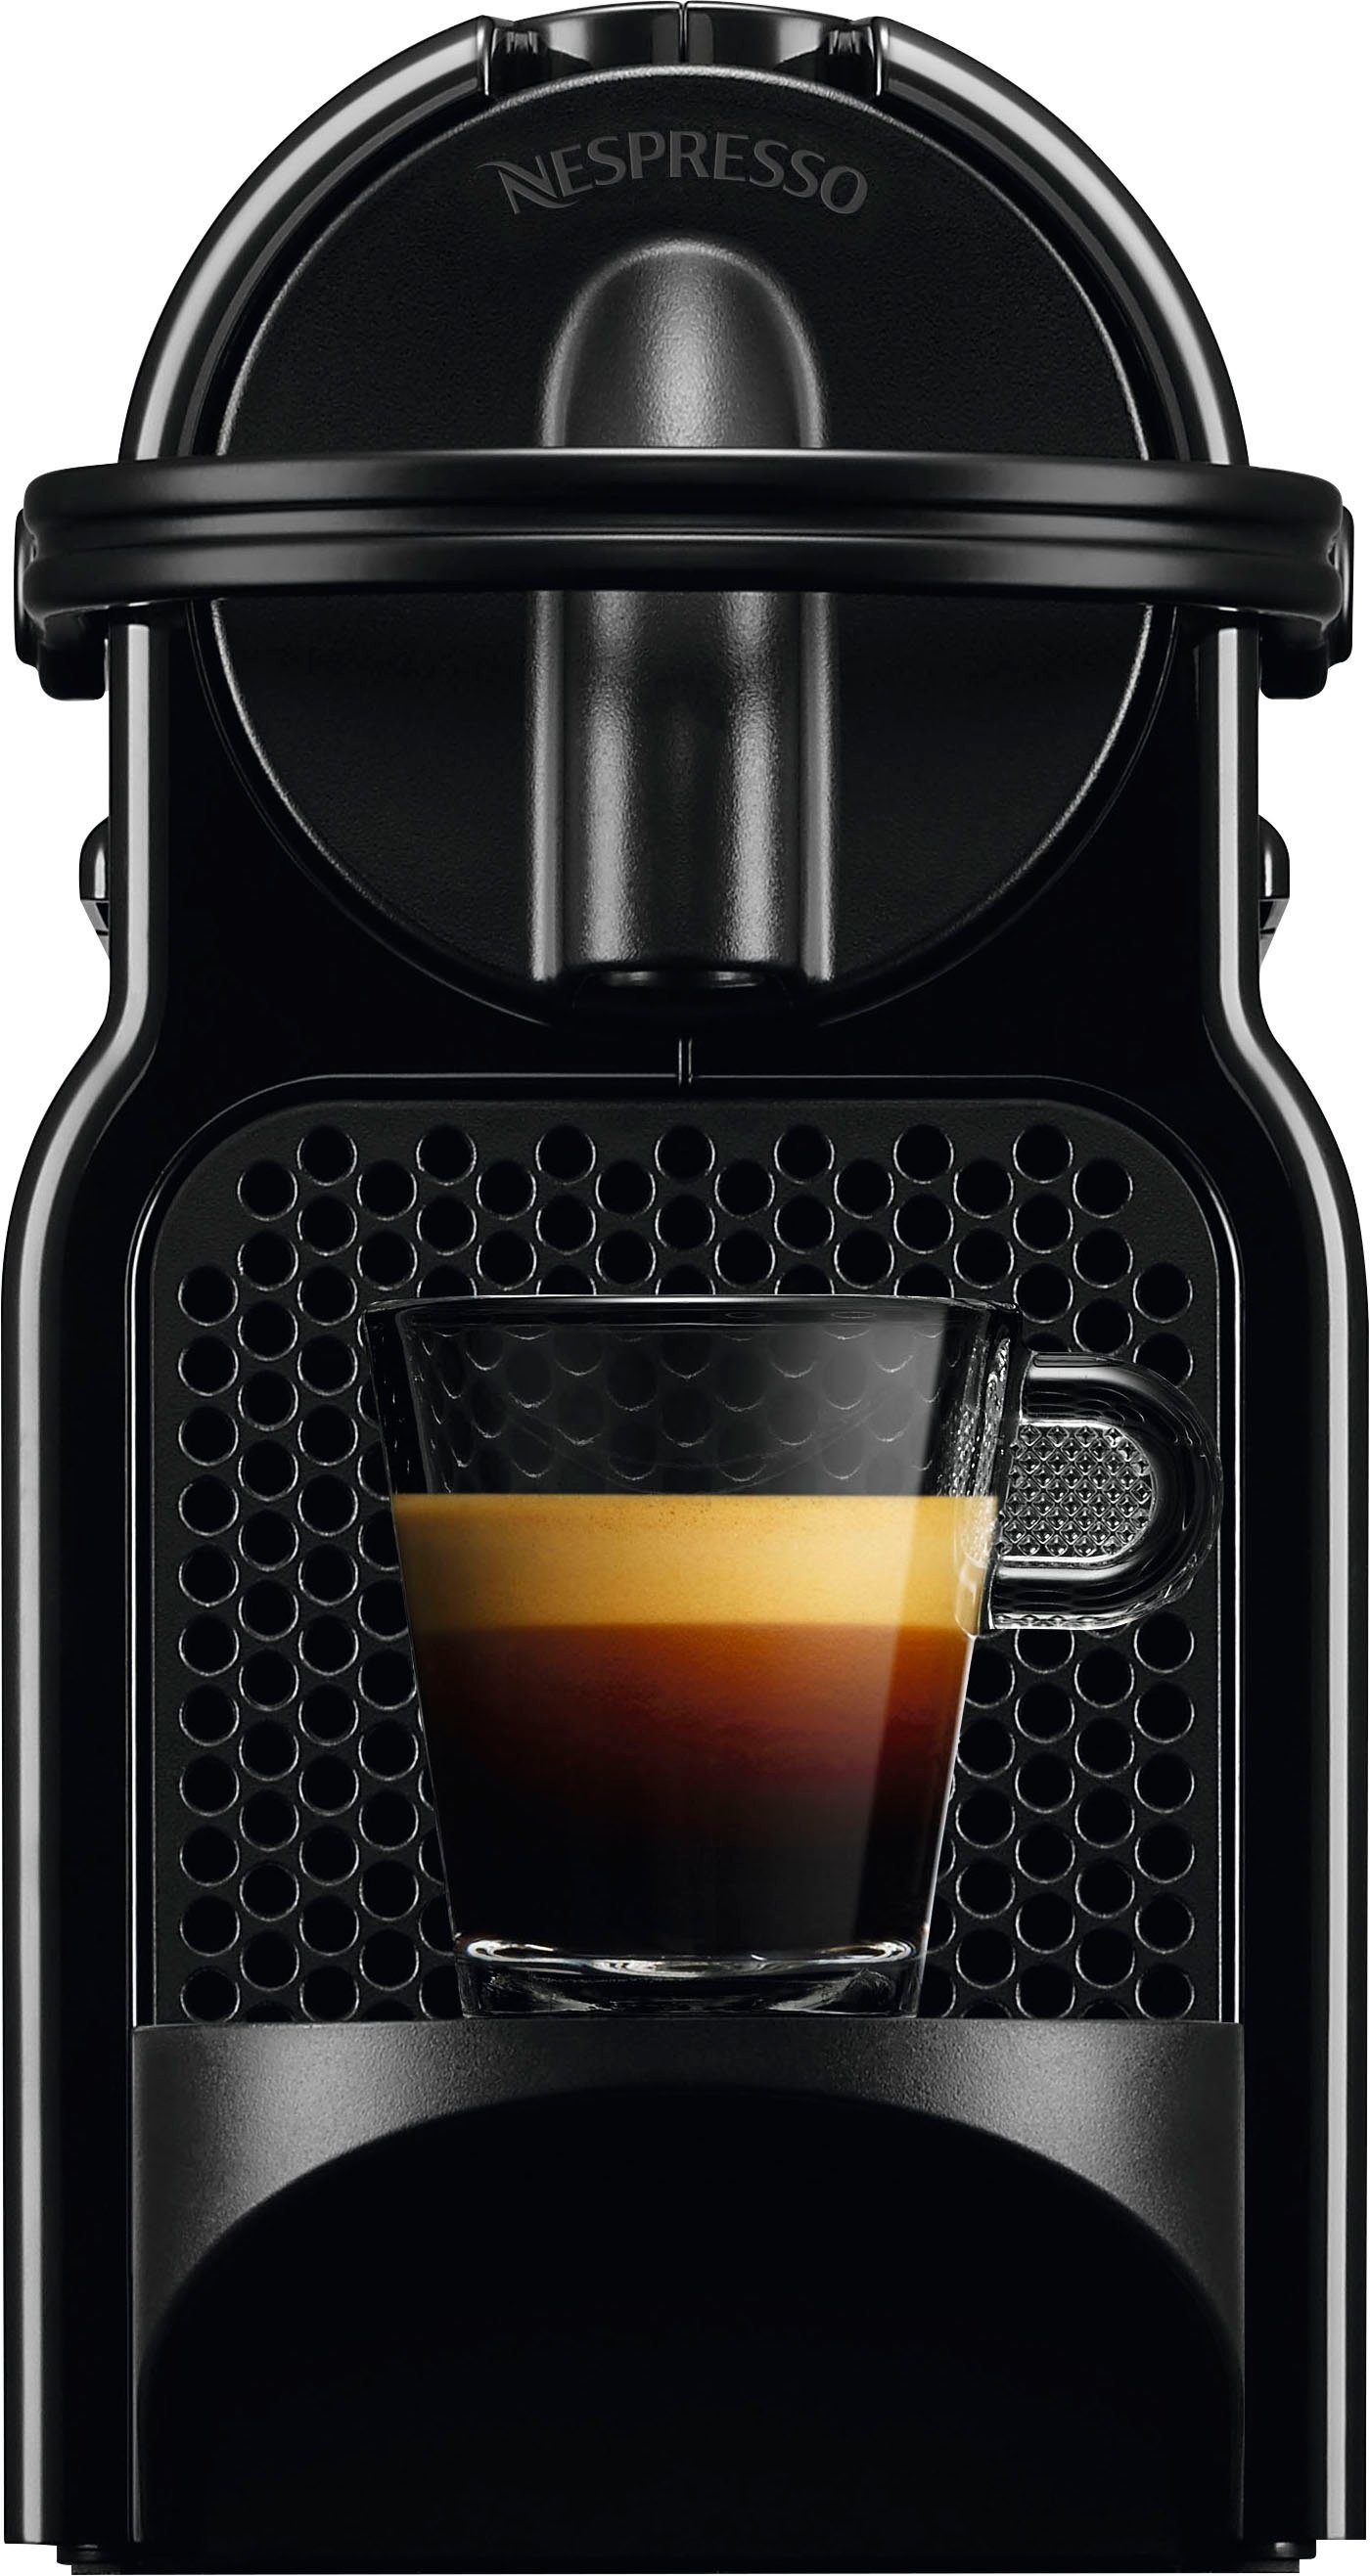 inkl. Kapselmaschine EN Nespresso Inissia Kapseln von Black, 7 Willkommenspaket mit 80.B DeLonghi,